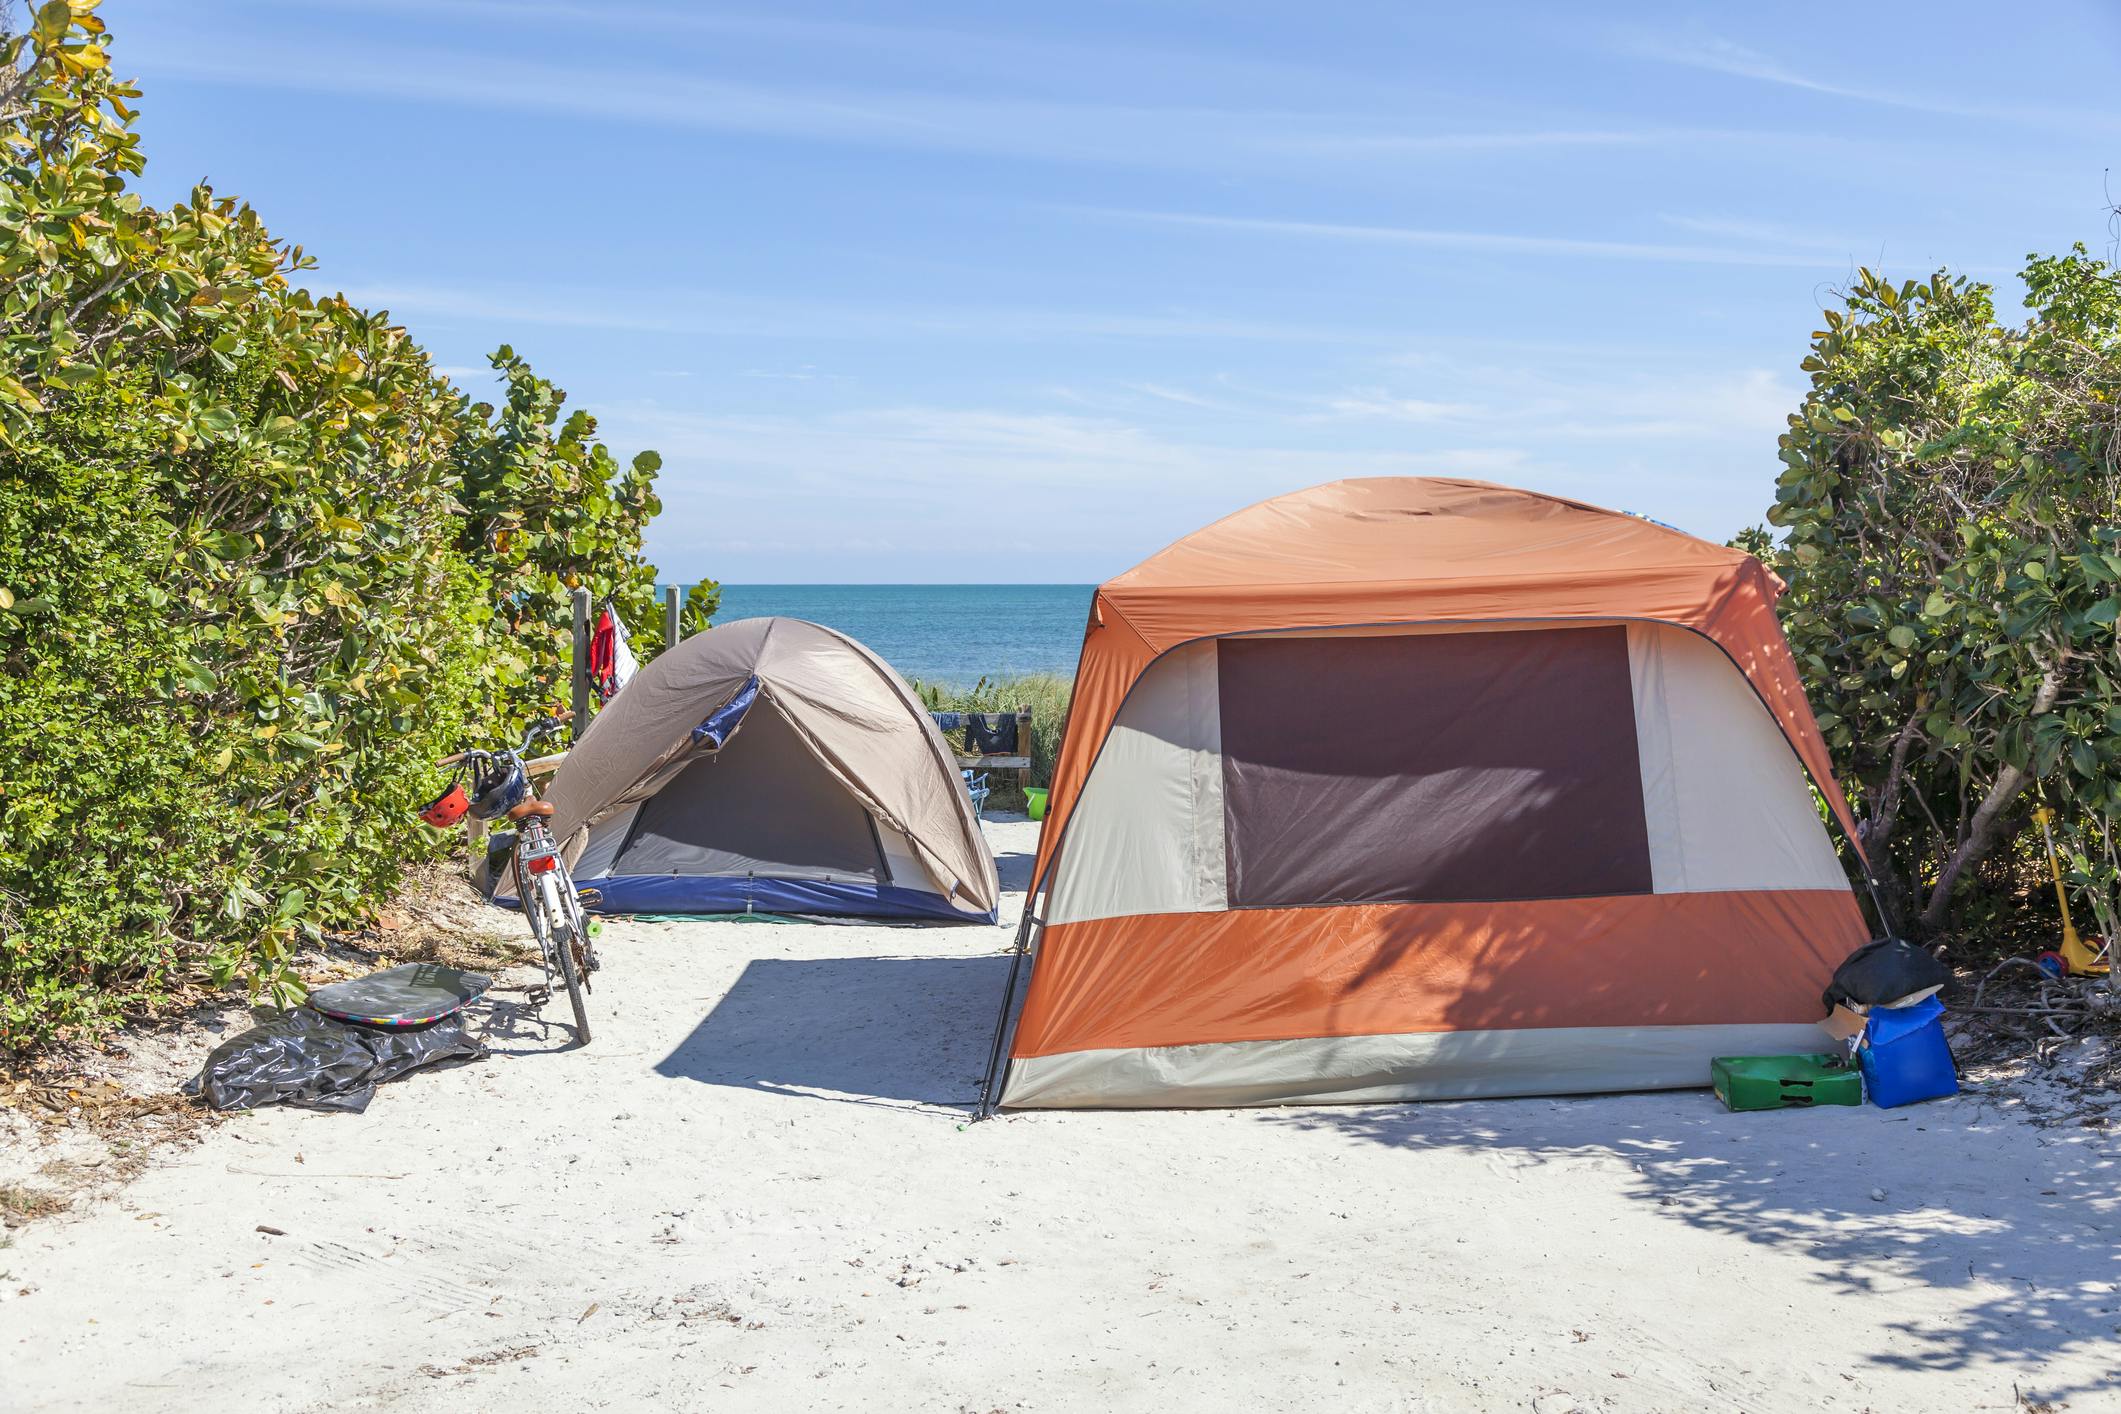 Camping at the beach in Bahia Honda state park. Florida Keys, United States